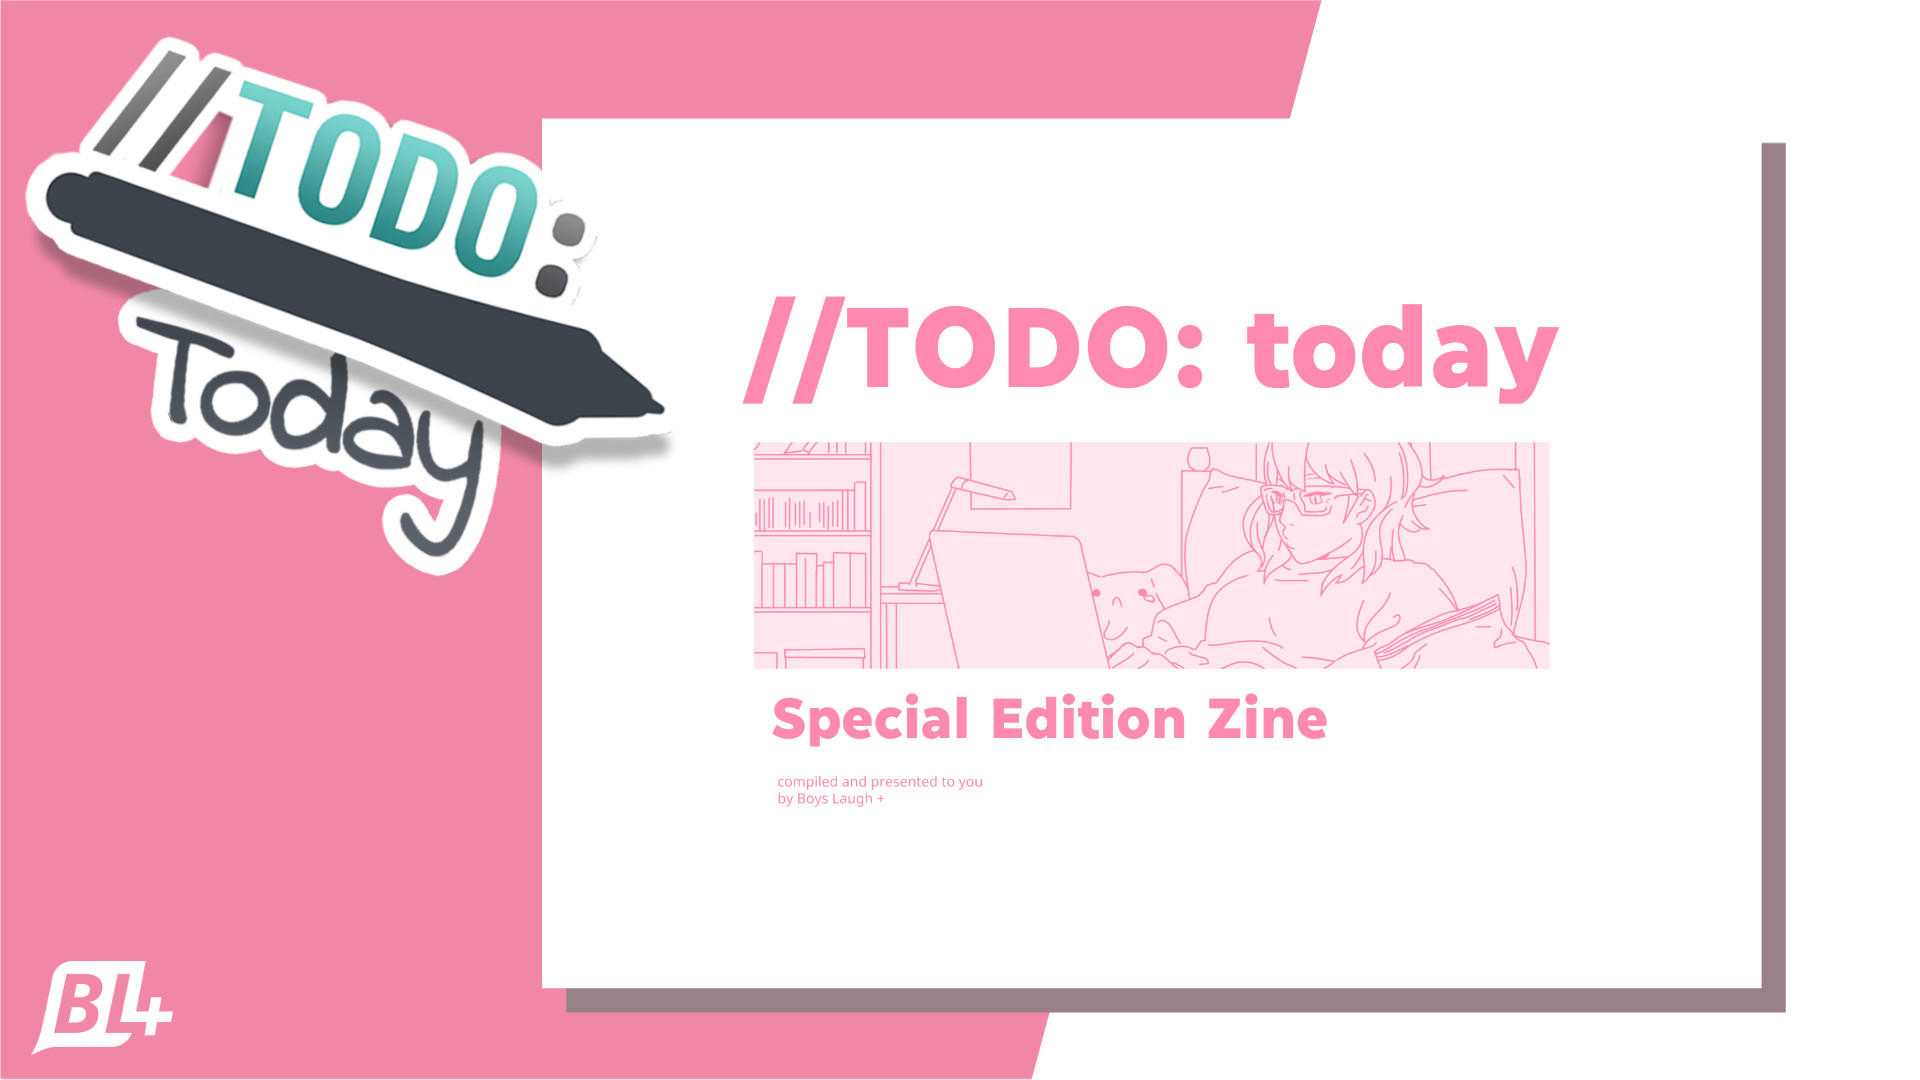 //TODO: today Special Edition Zine screenshot